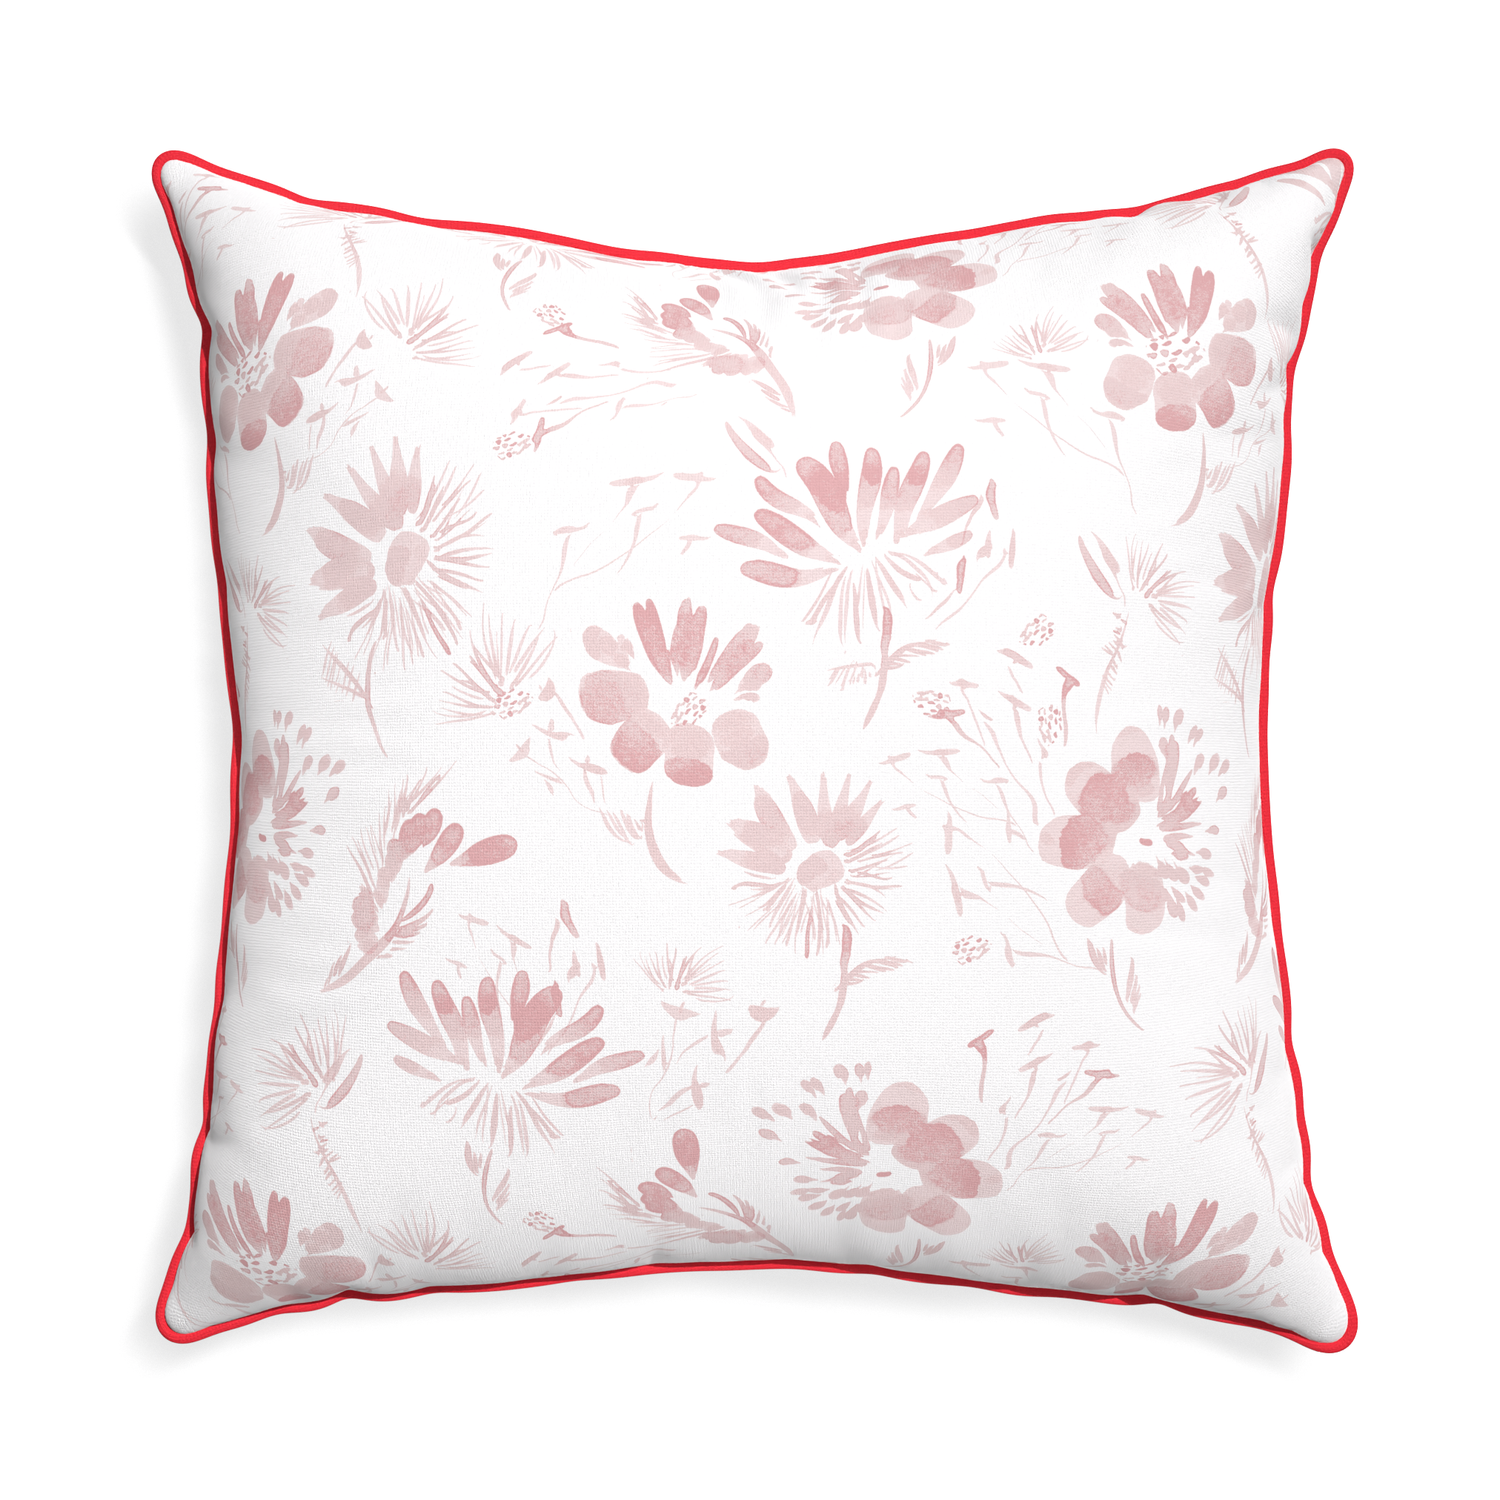 Euro-sham blake custom pillow with cherry piping on white background